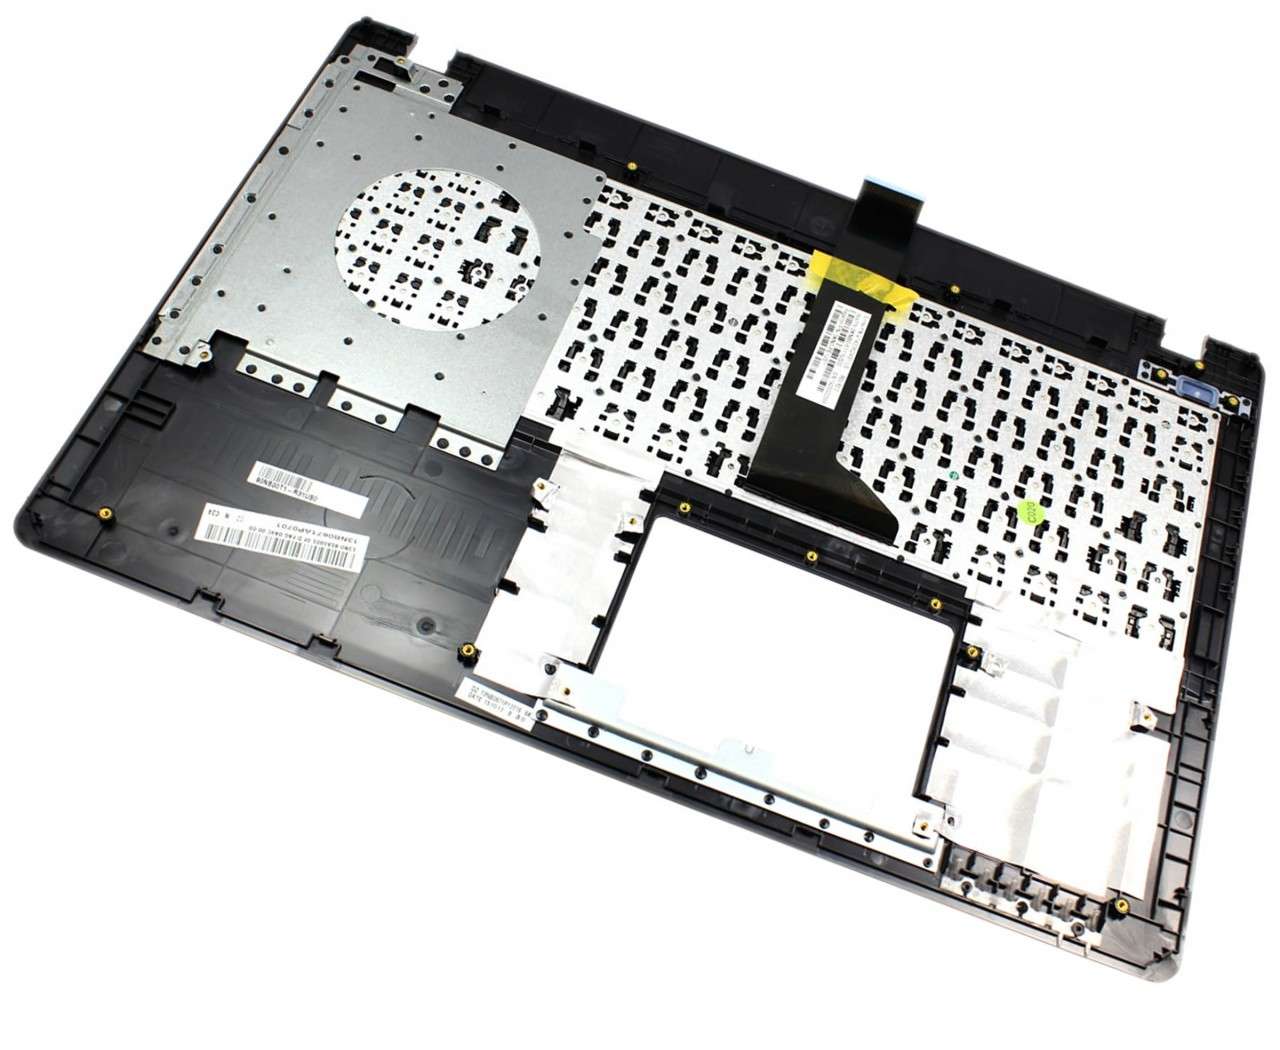 Tastatura Asus X552E neagra cu Palmrest argintiu